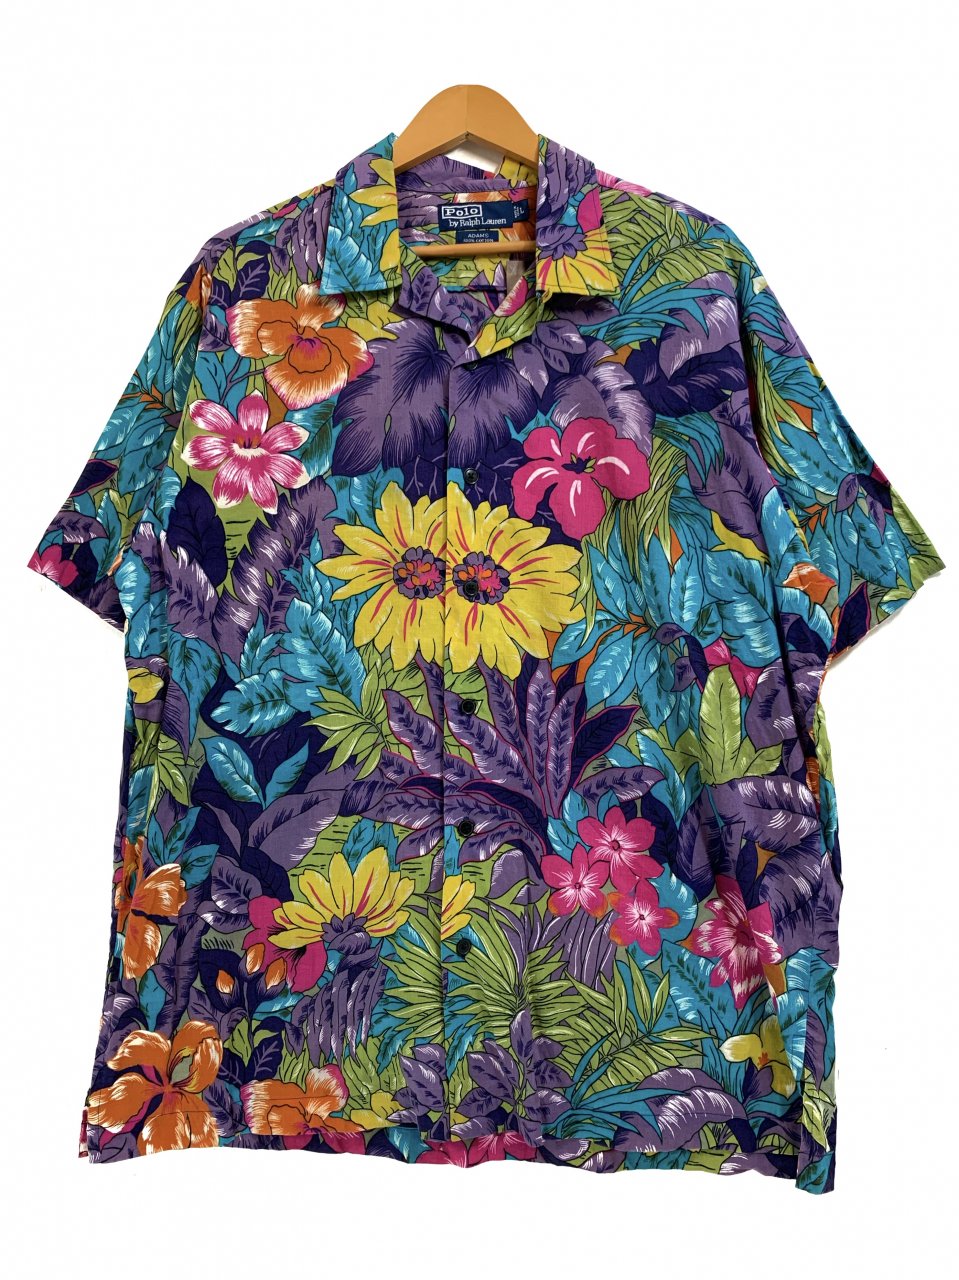 s Polo Ralph Lauren "ADAMS" Cotton Aloha Shirt 紫 L ポロラルフ